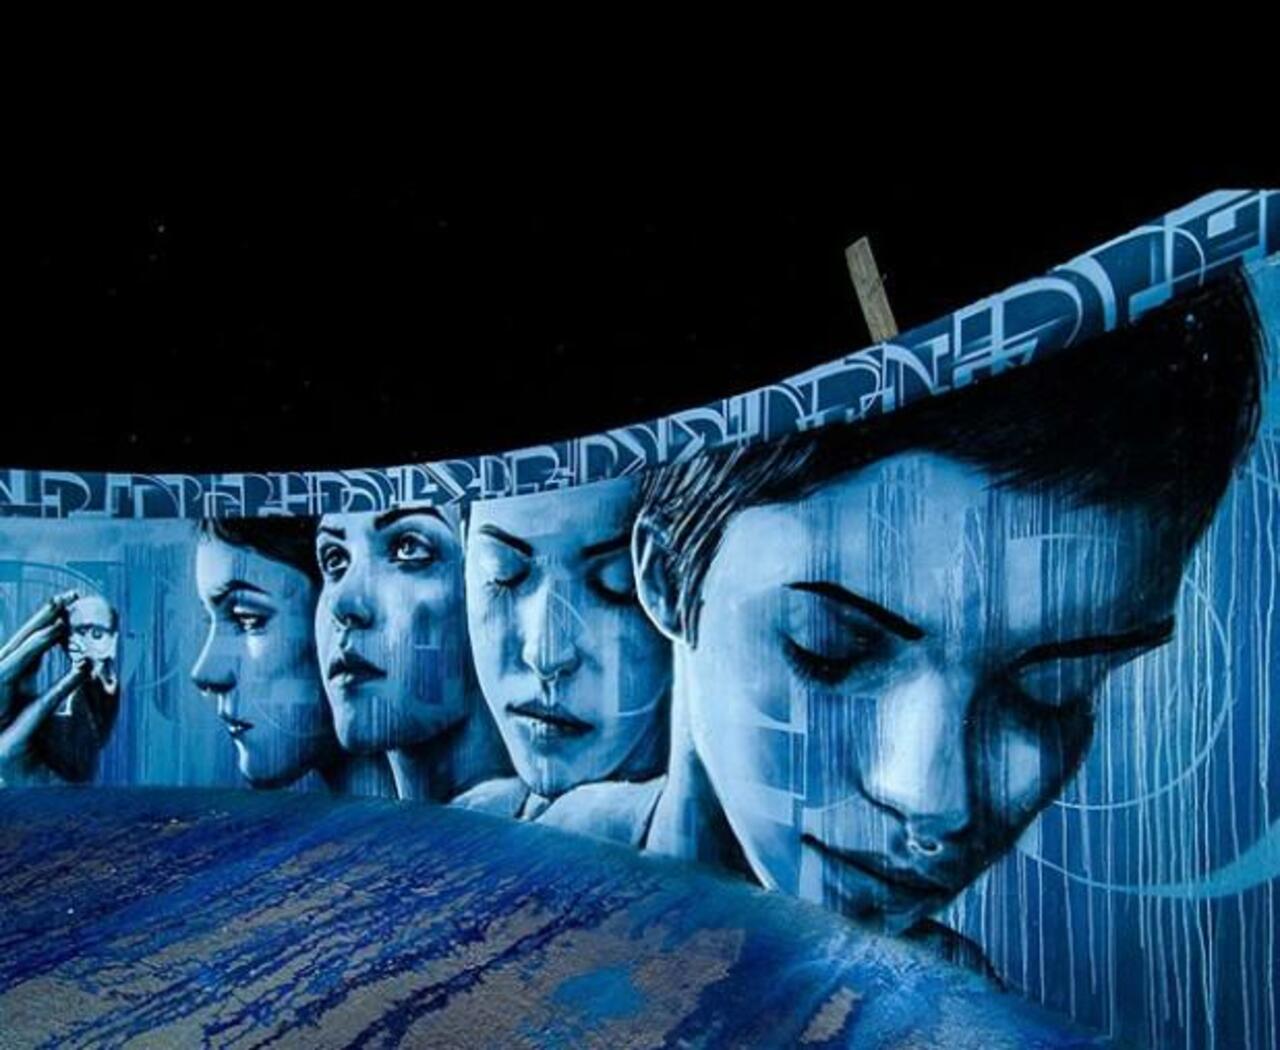 Beautiful night shot of Christina Angelina & EaseOne killer Street Art mural 

#art #arte #graffiti #streetart http://t.co/Px8j7AuJAA